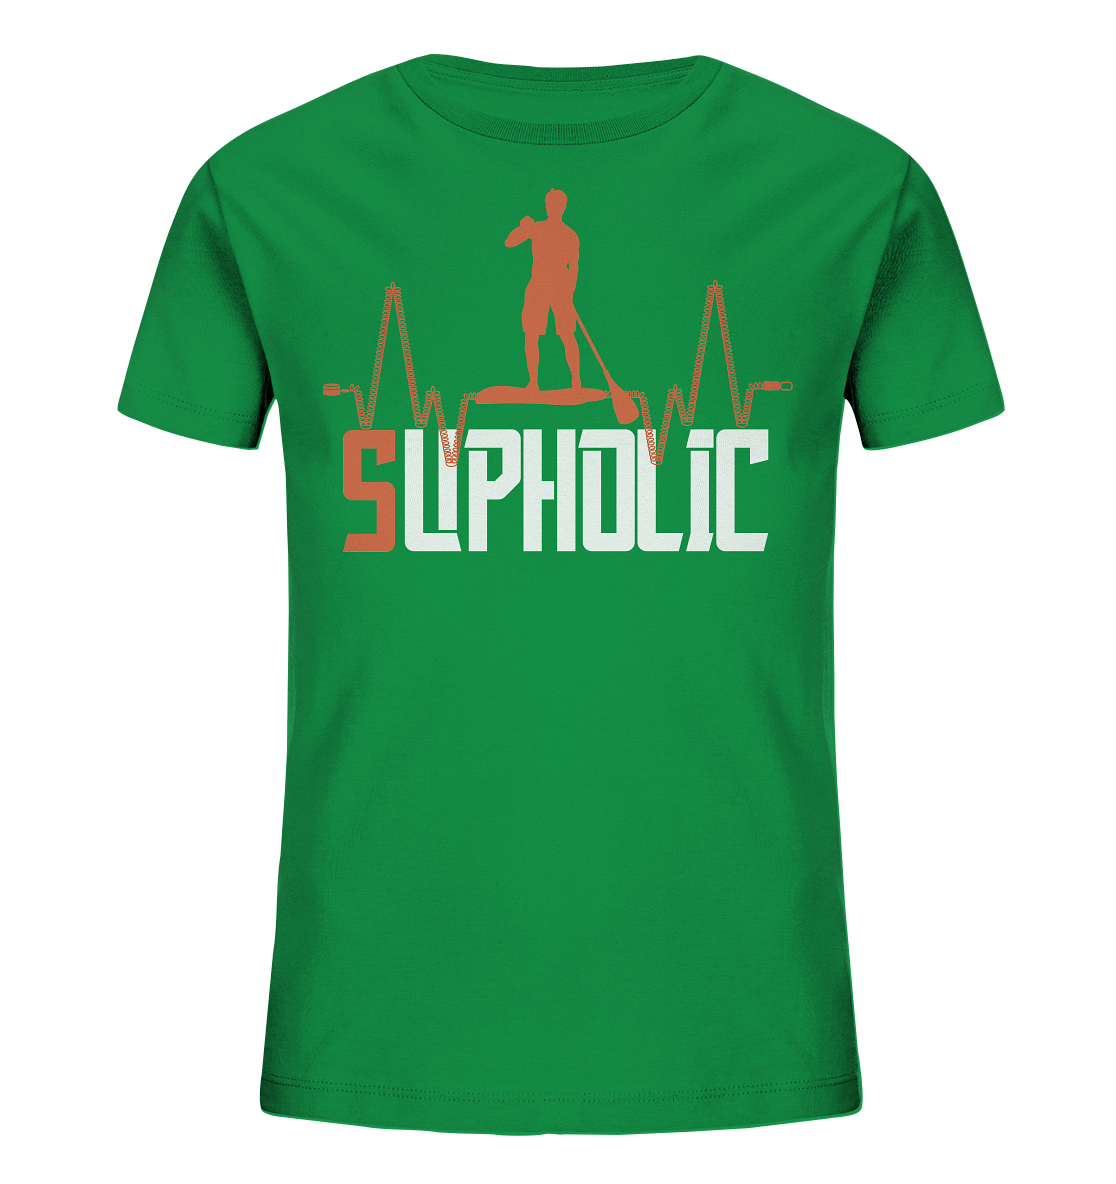 Supholic Boy Kids - Kids Organic Shirt